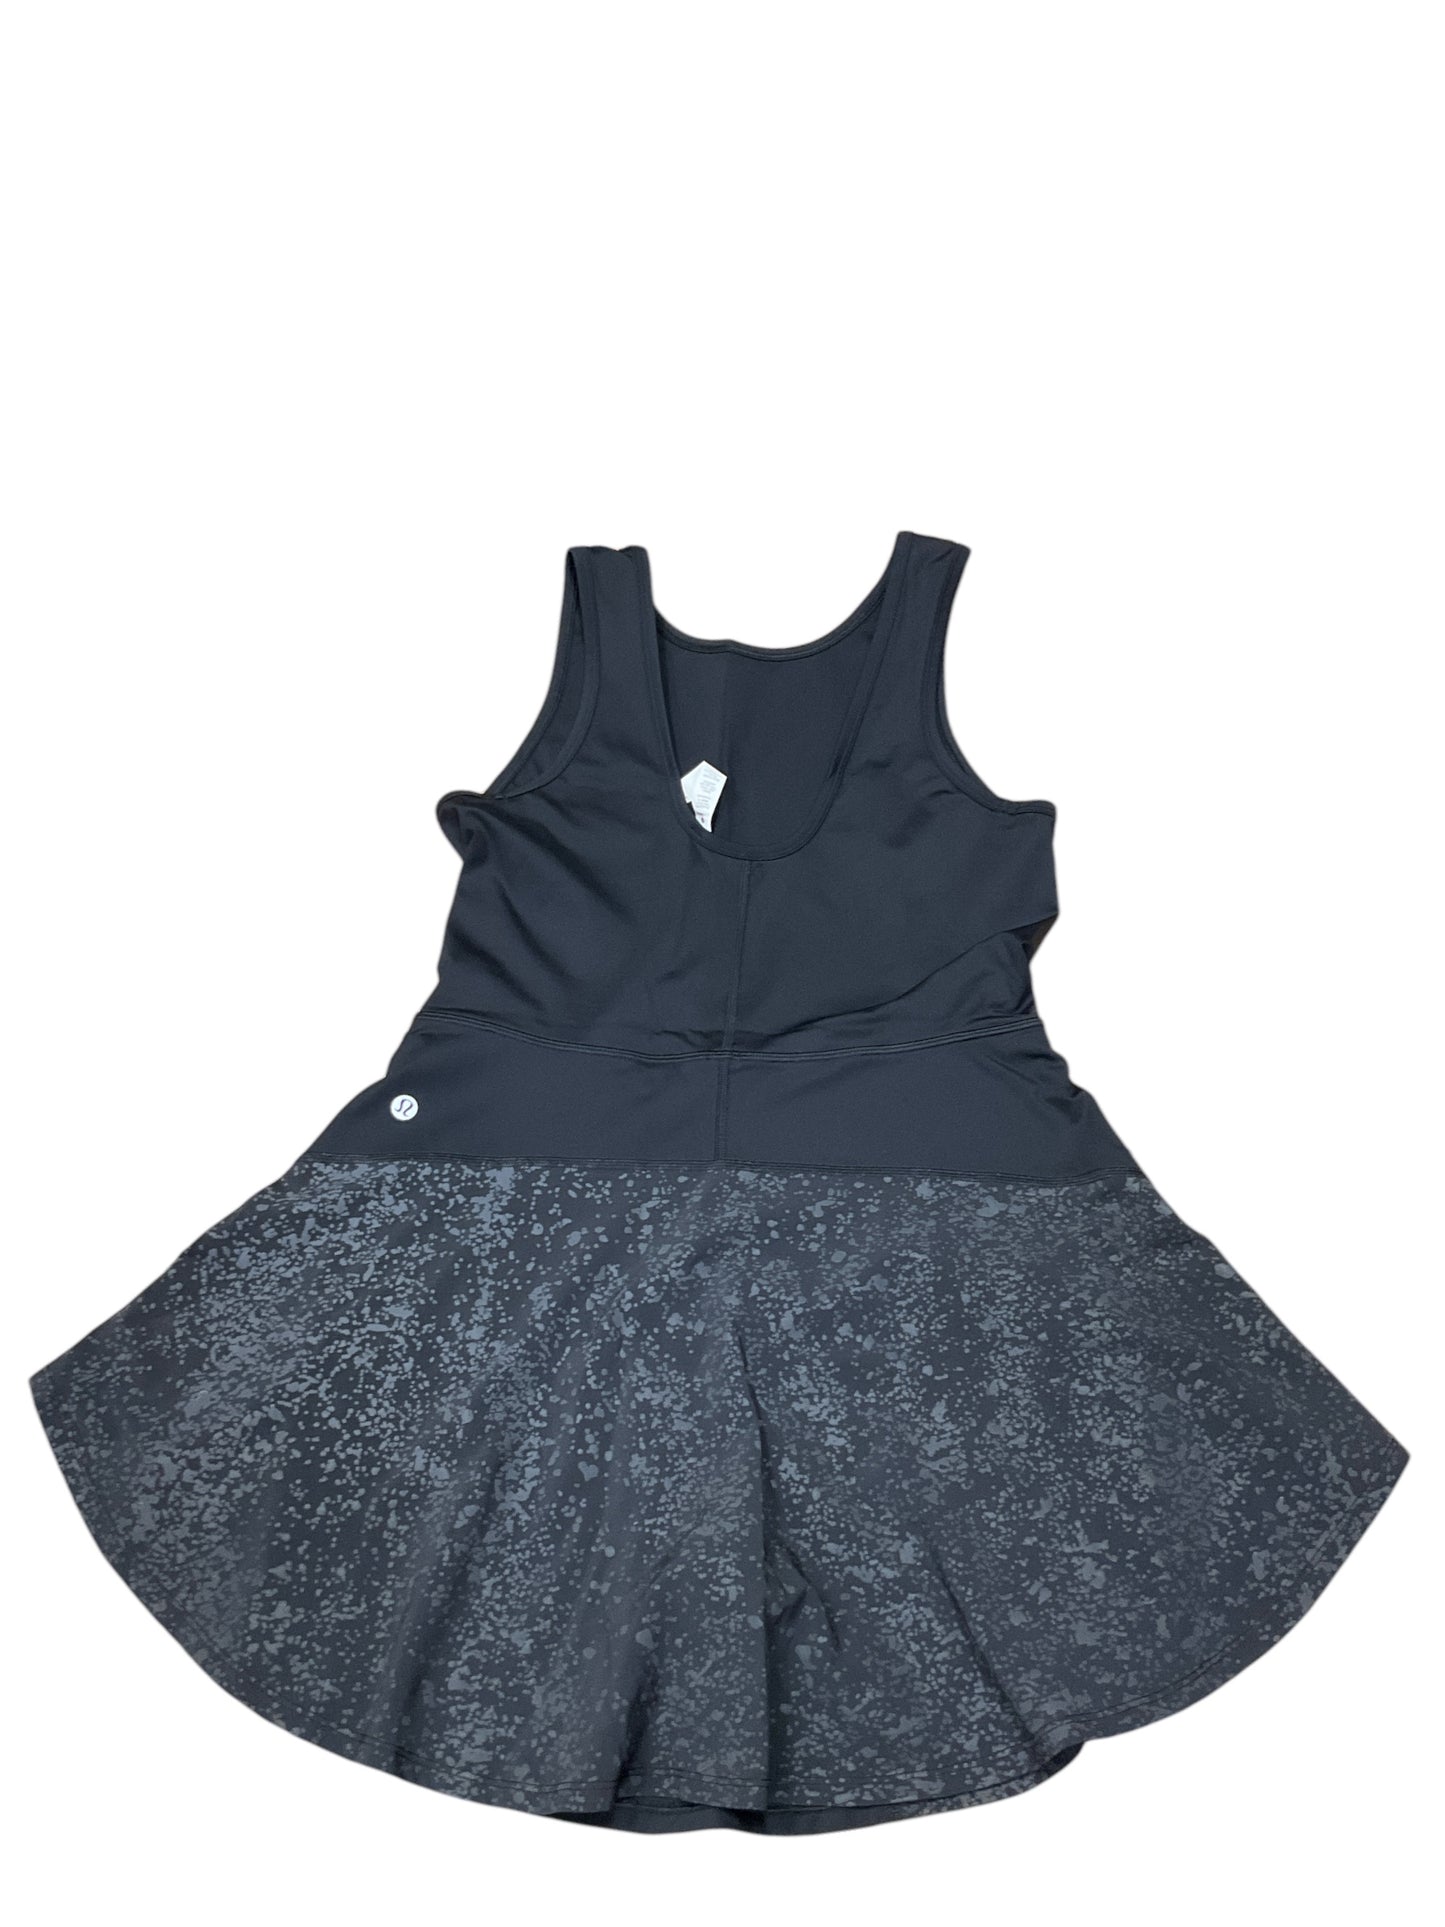 Athletic Dress By Lululemon  Size: 8